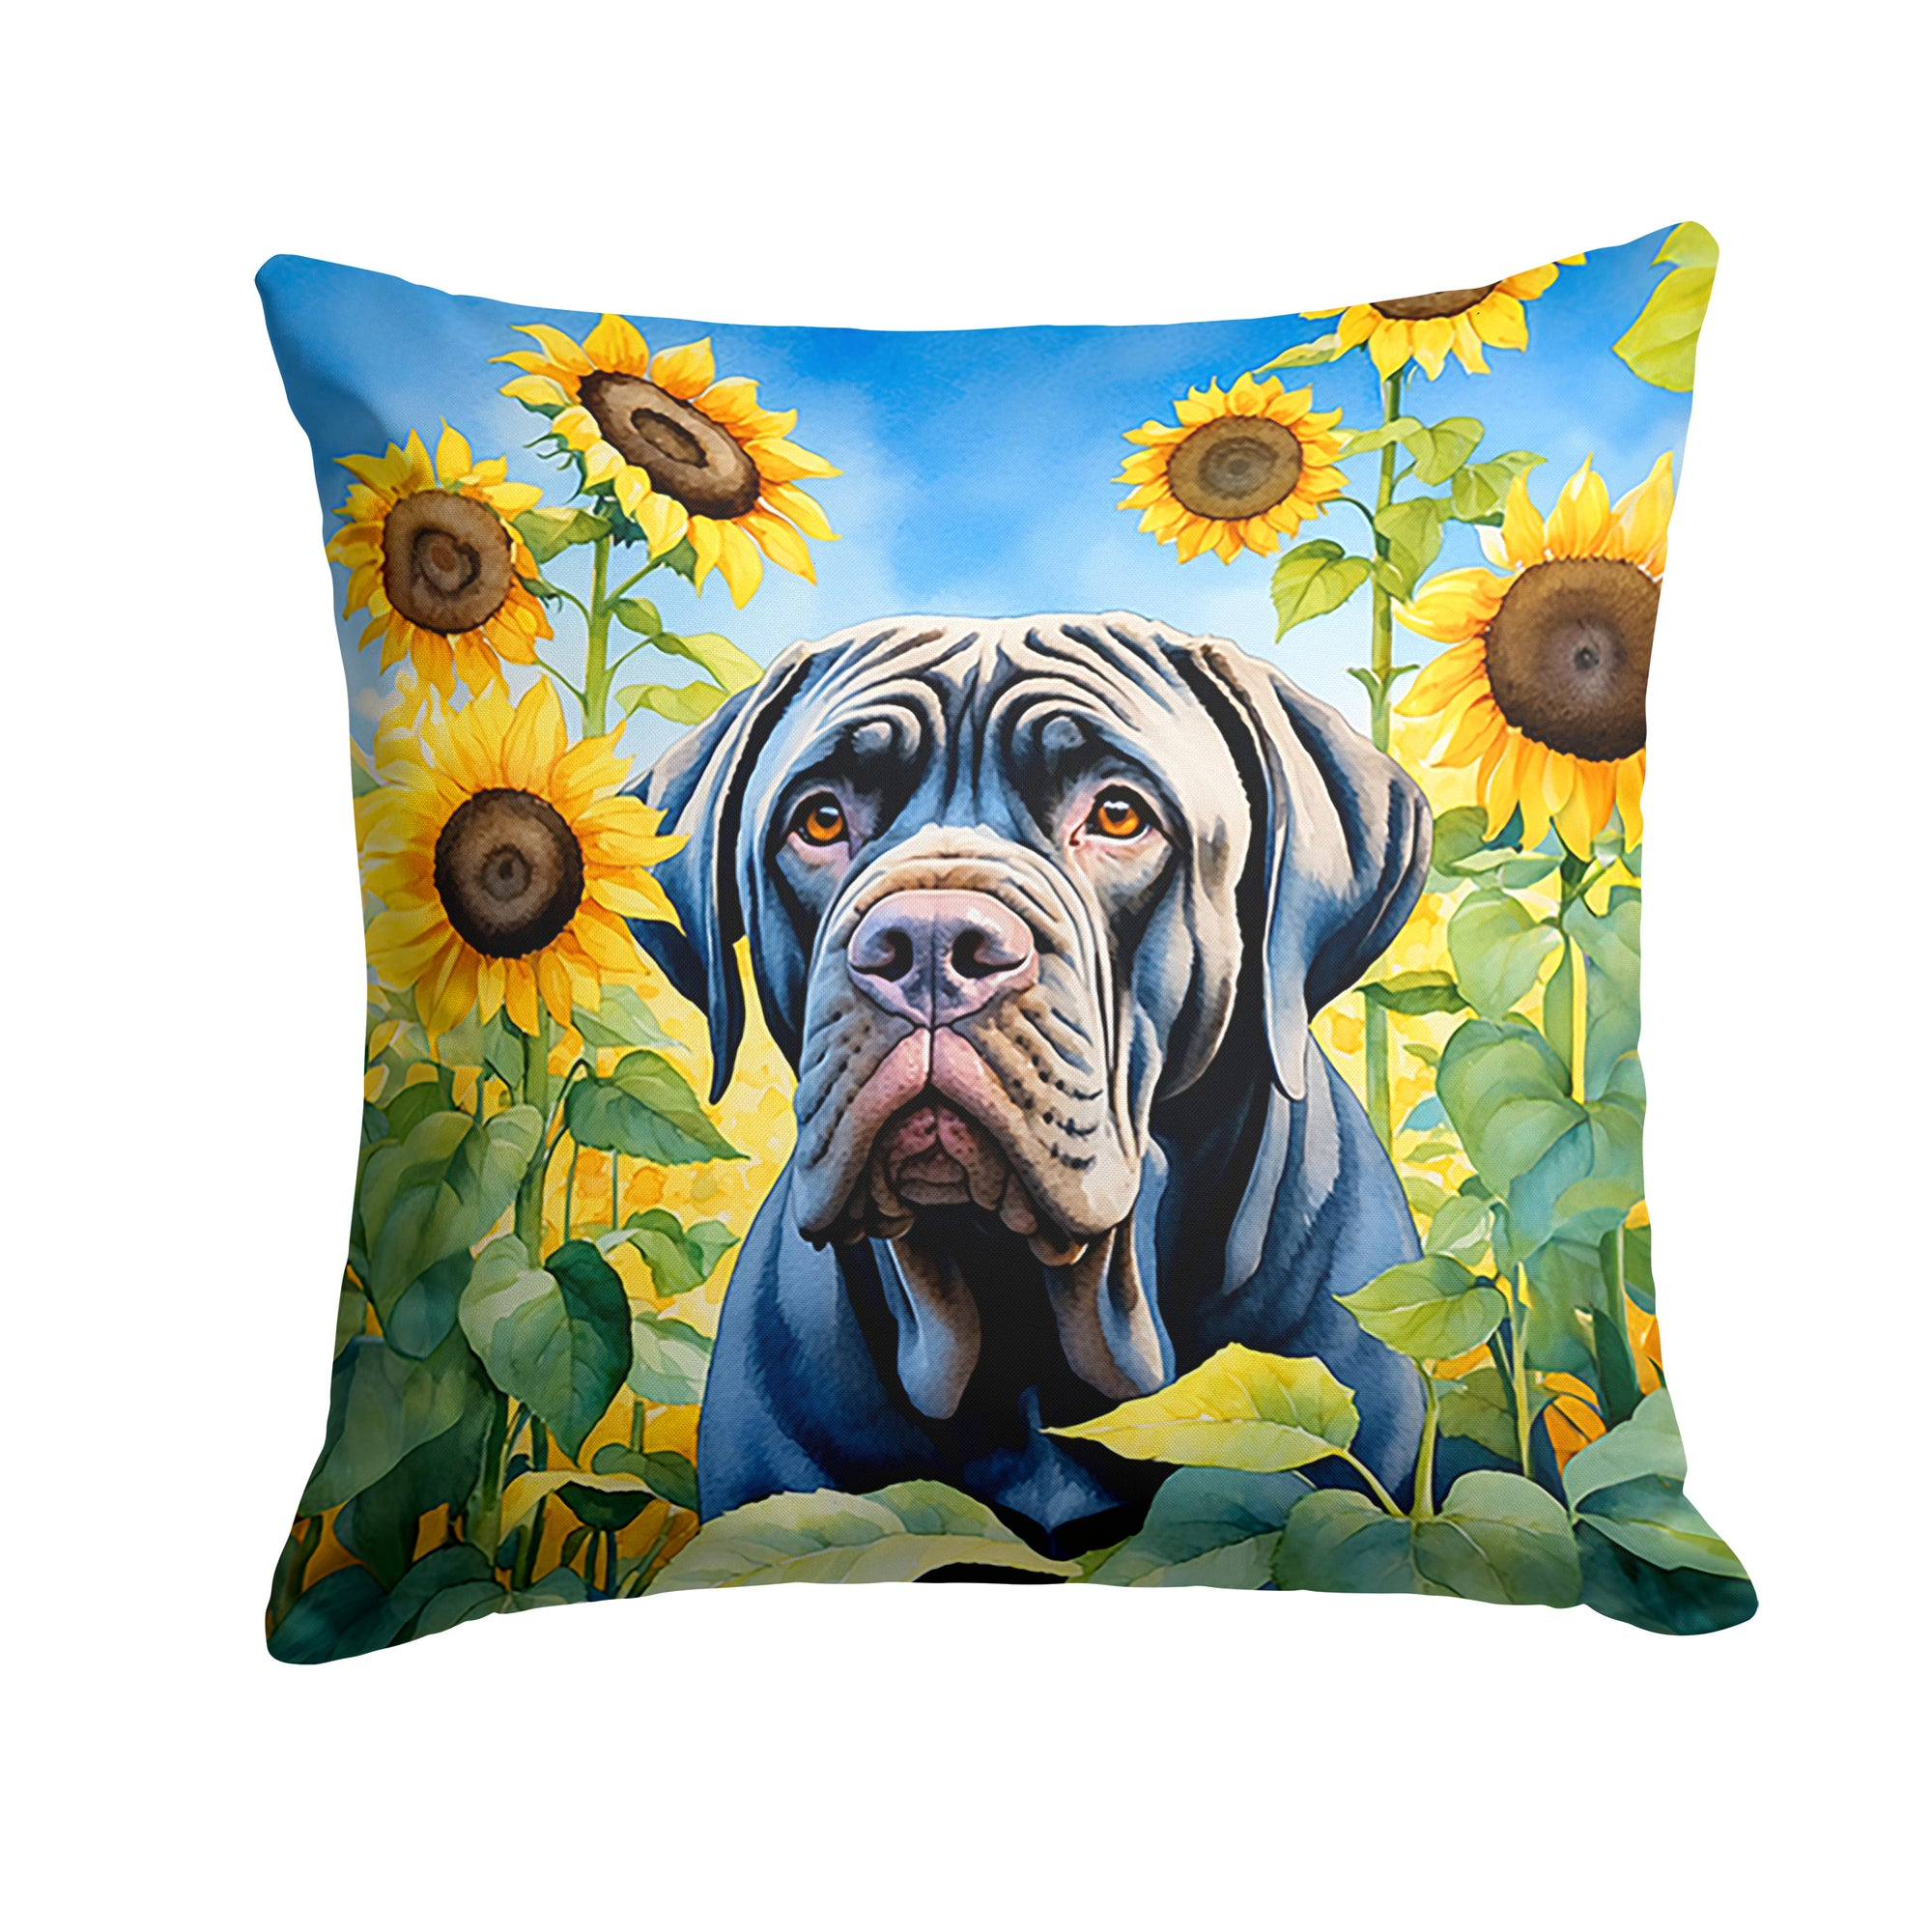 Buy this Neapolitan Mastiff in Sunflowers Throw Pillow